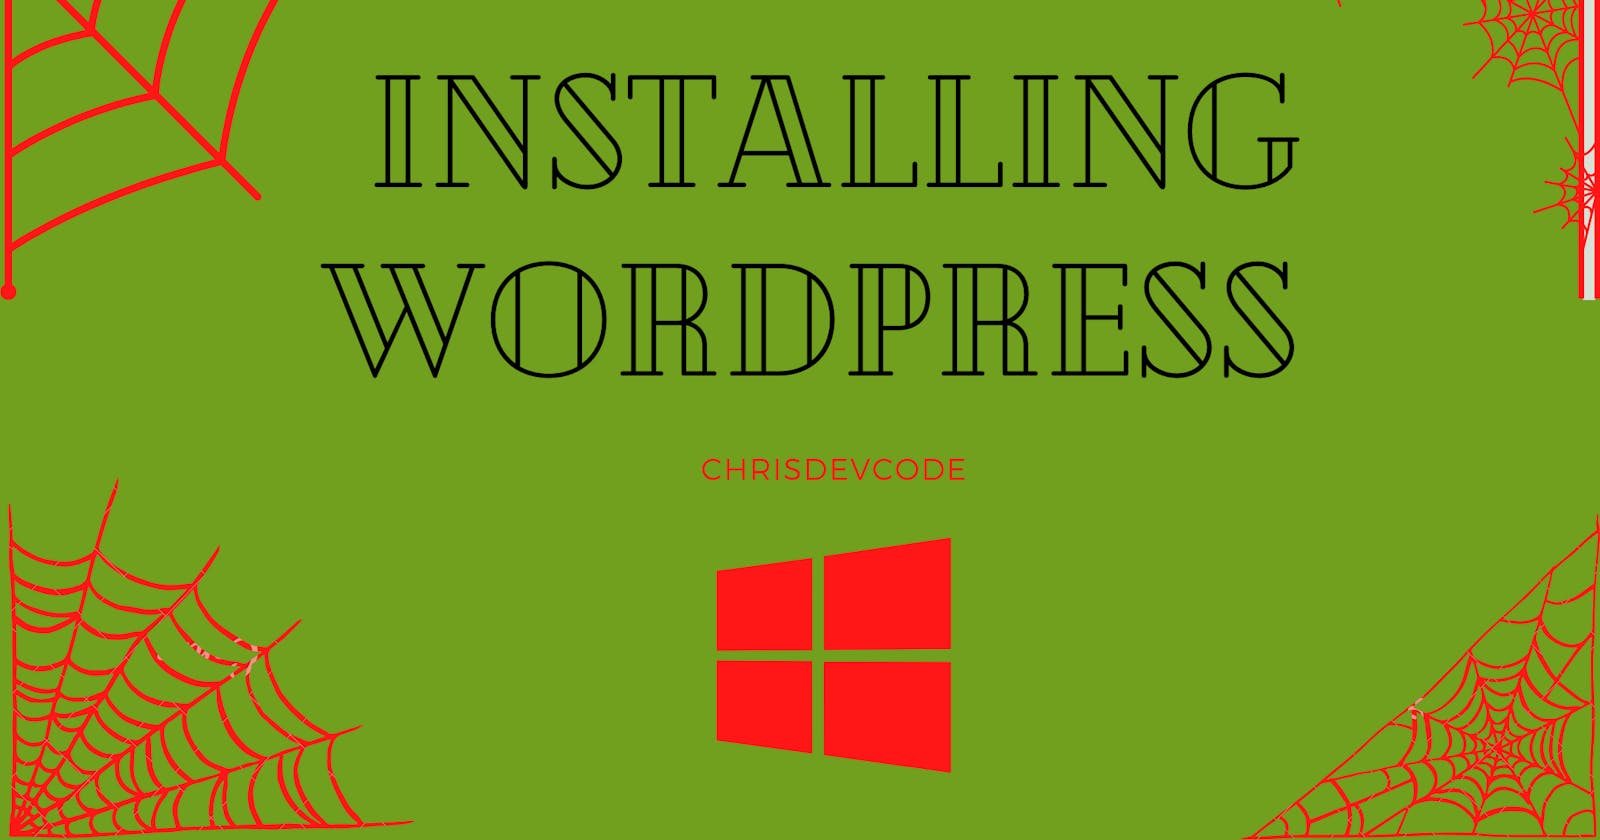 How To Install WordPress in Windows